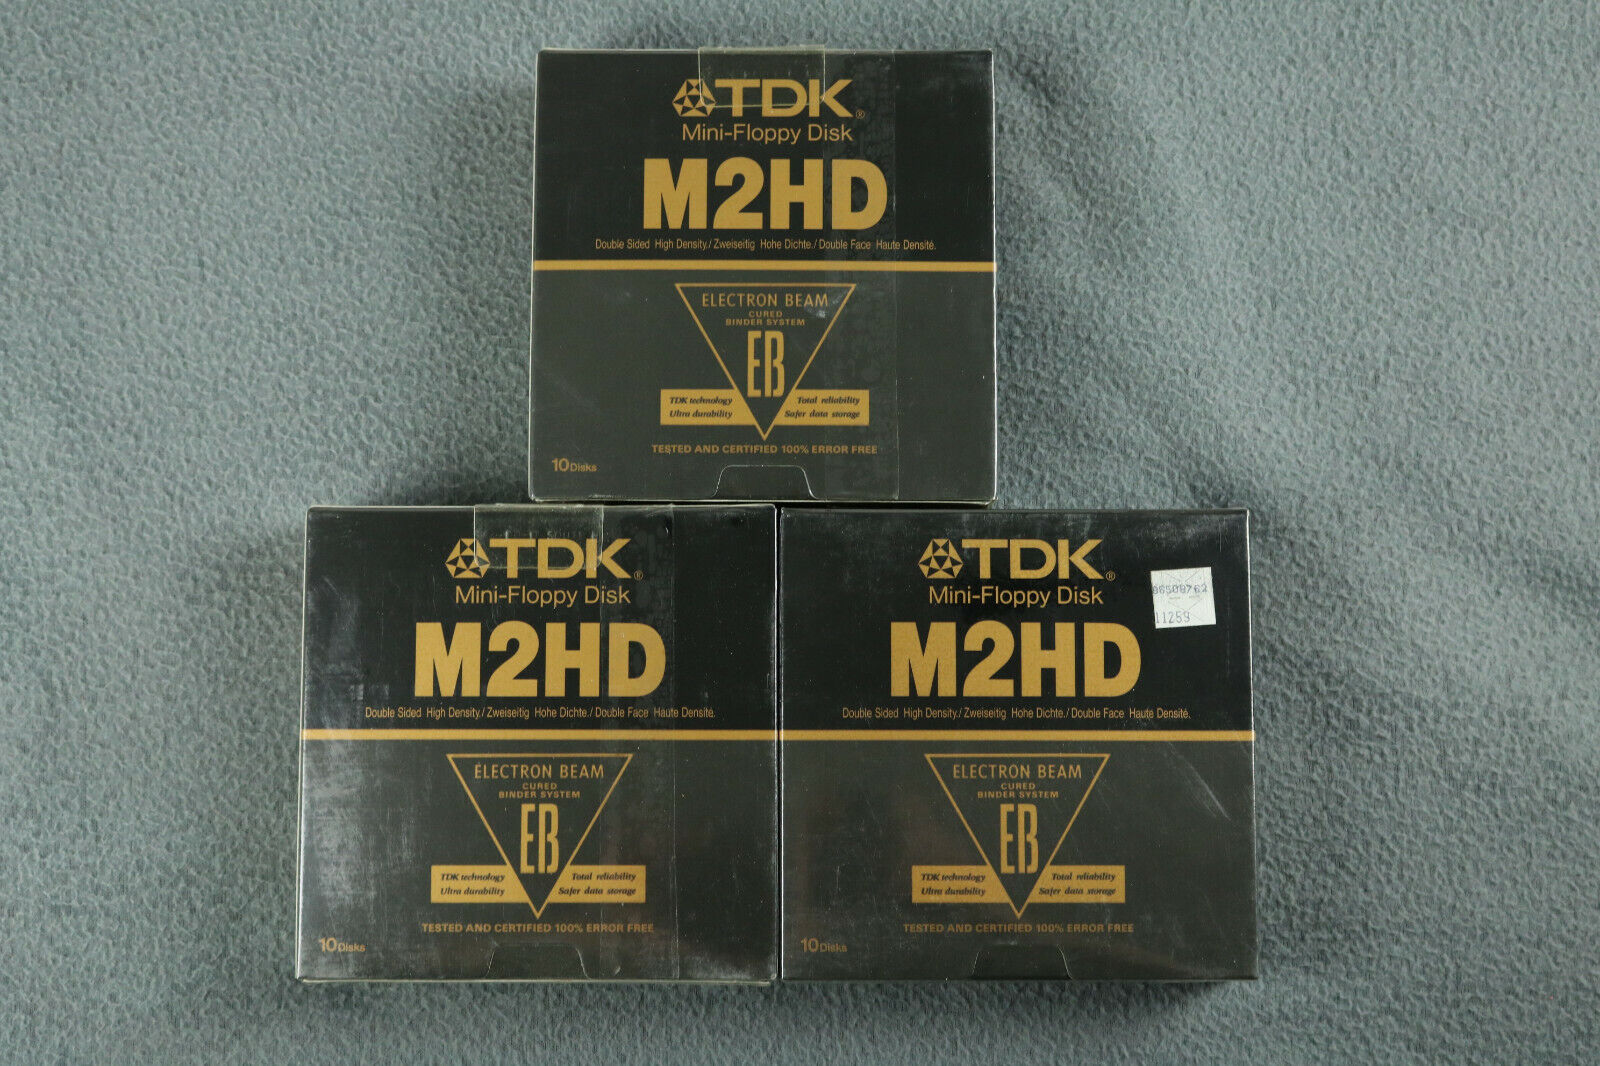 3x TDK M2HD Mini-Floppy Disk 10 pack